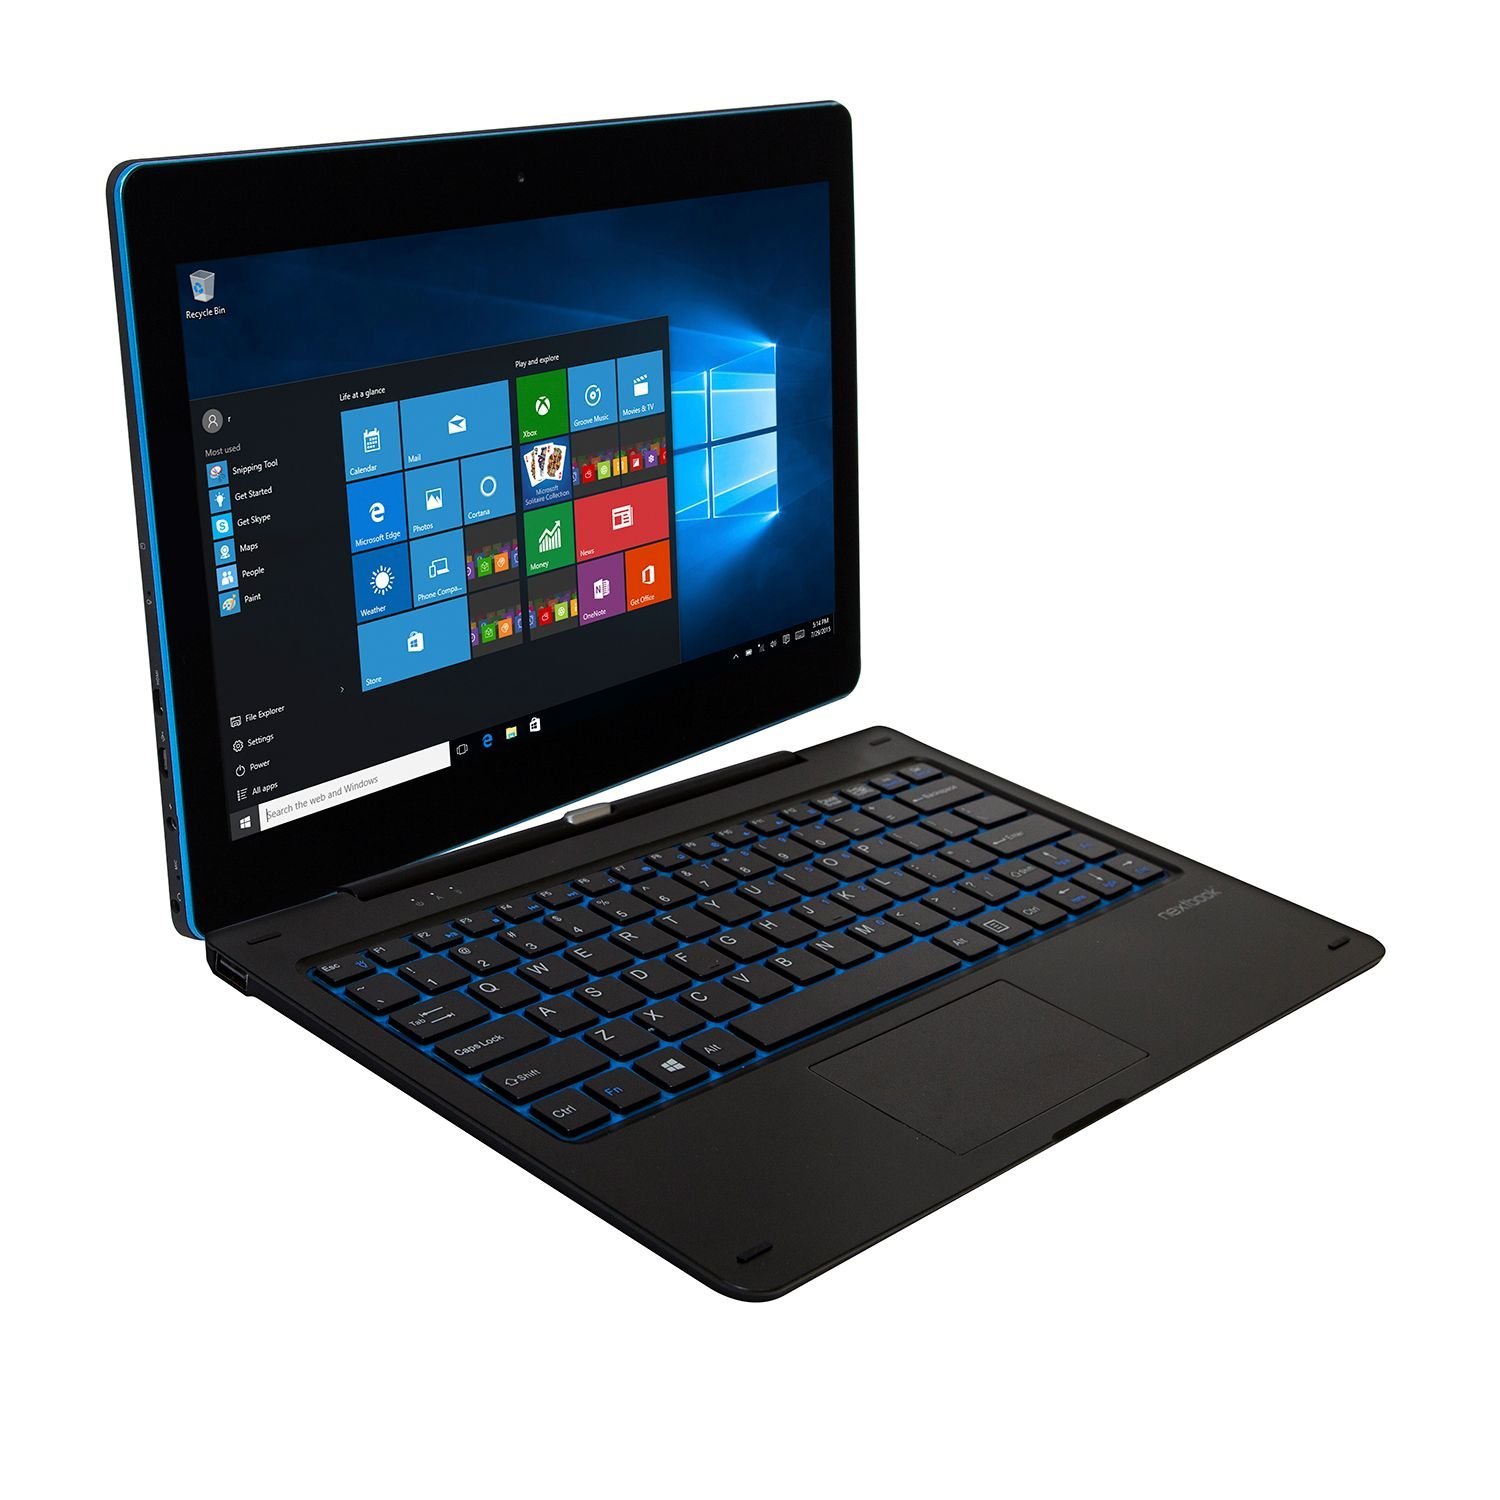 Nextbook-Touchscreen Intel Quad Core 2/64GB Bluetooth Webcam Wi-Fi HDMI Windows10 Tablet Laptop Combo